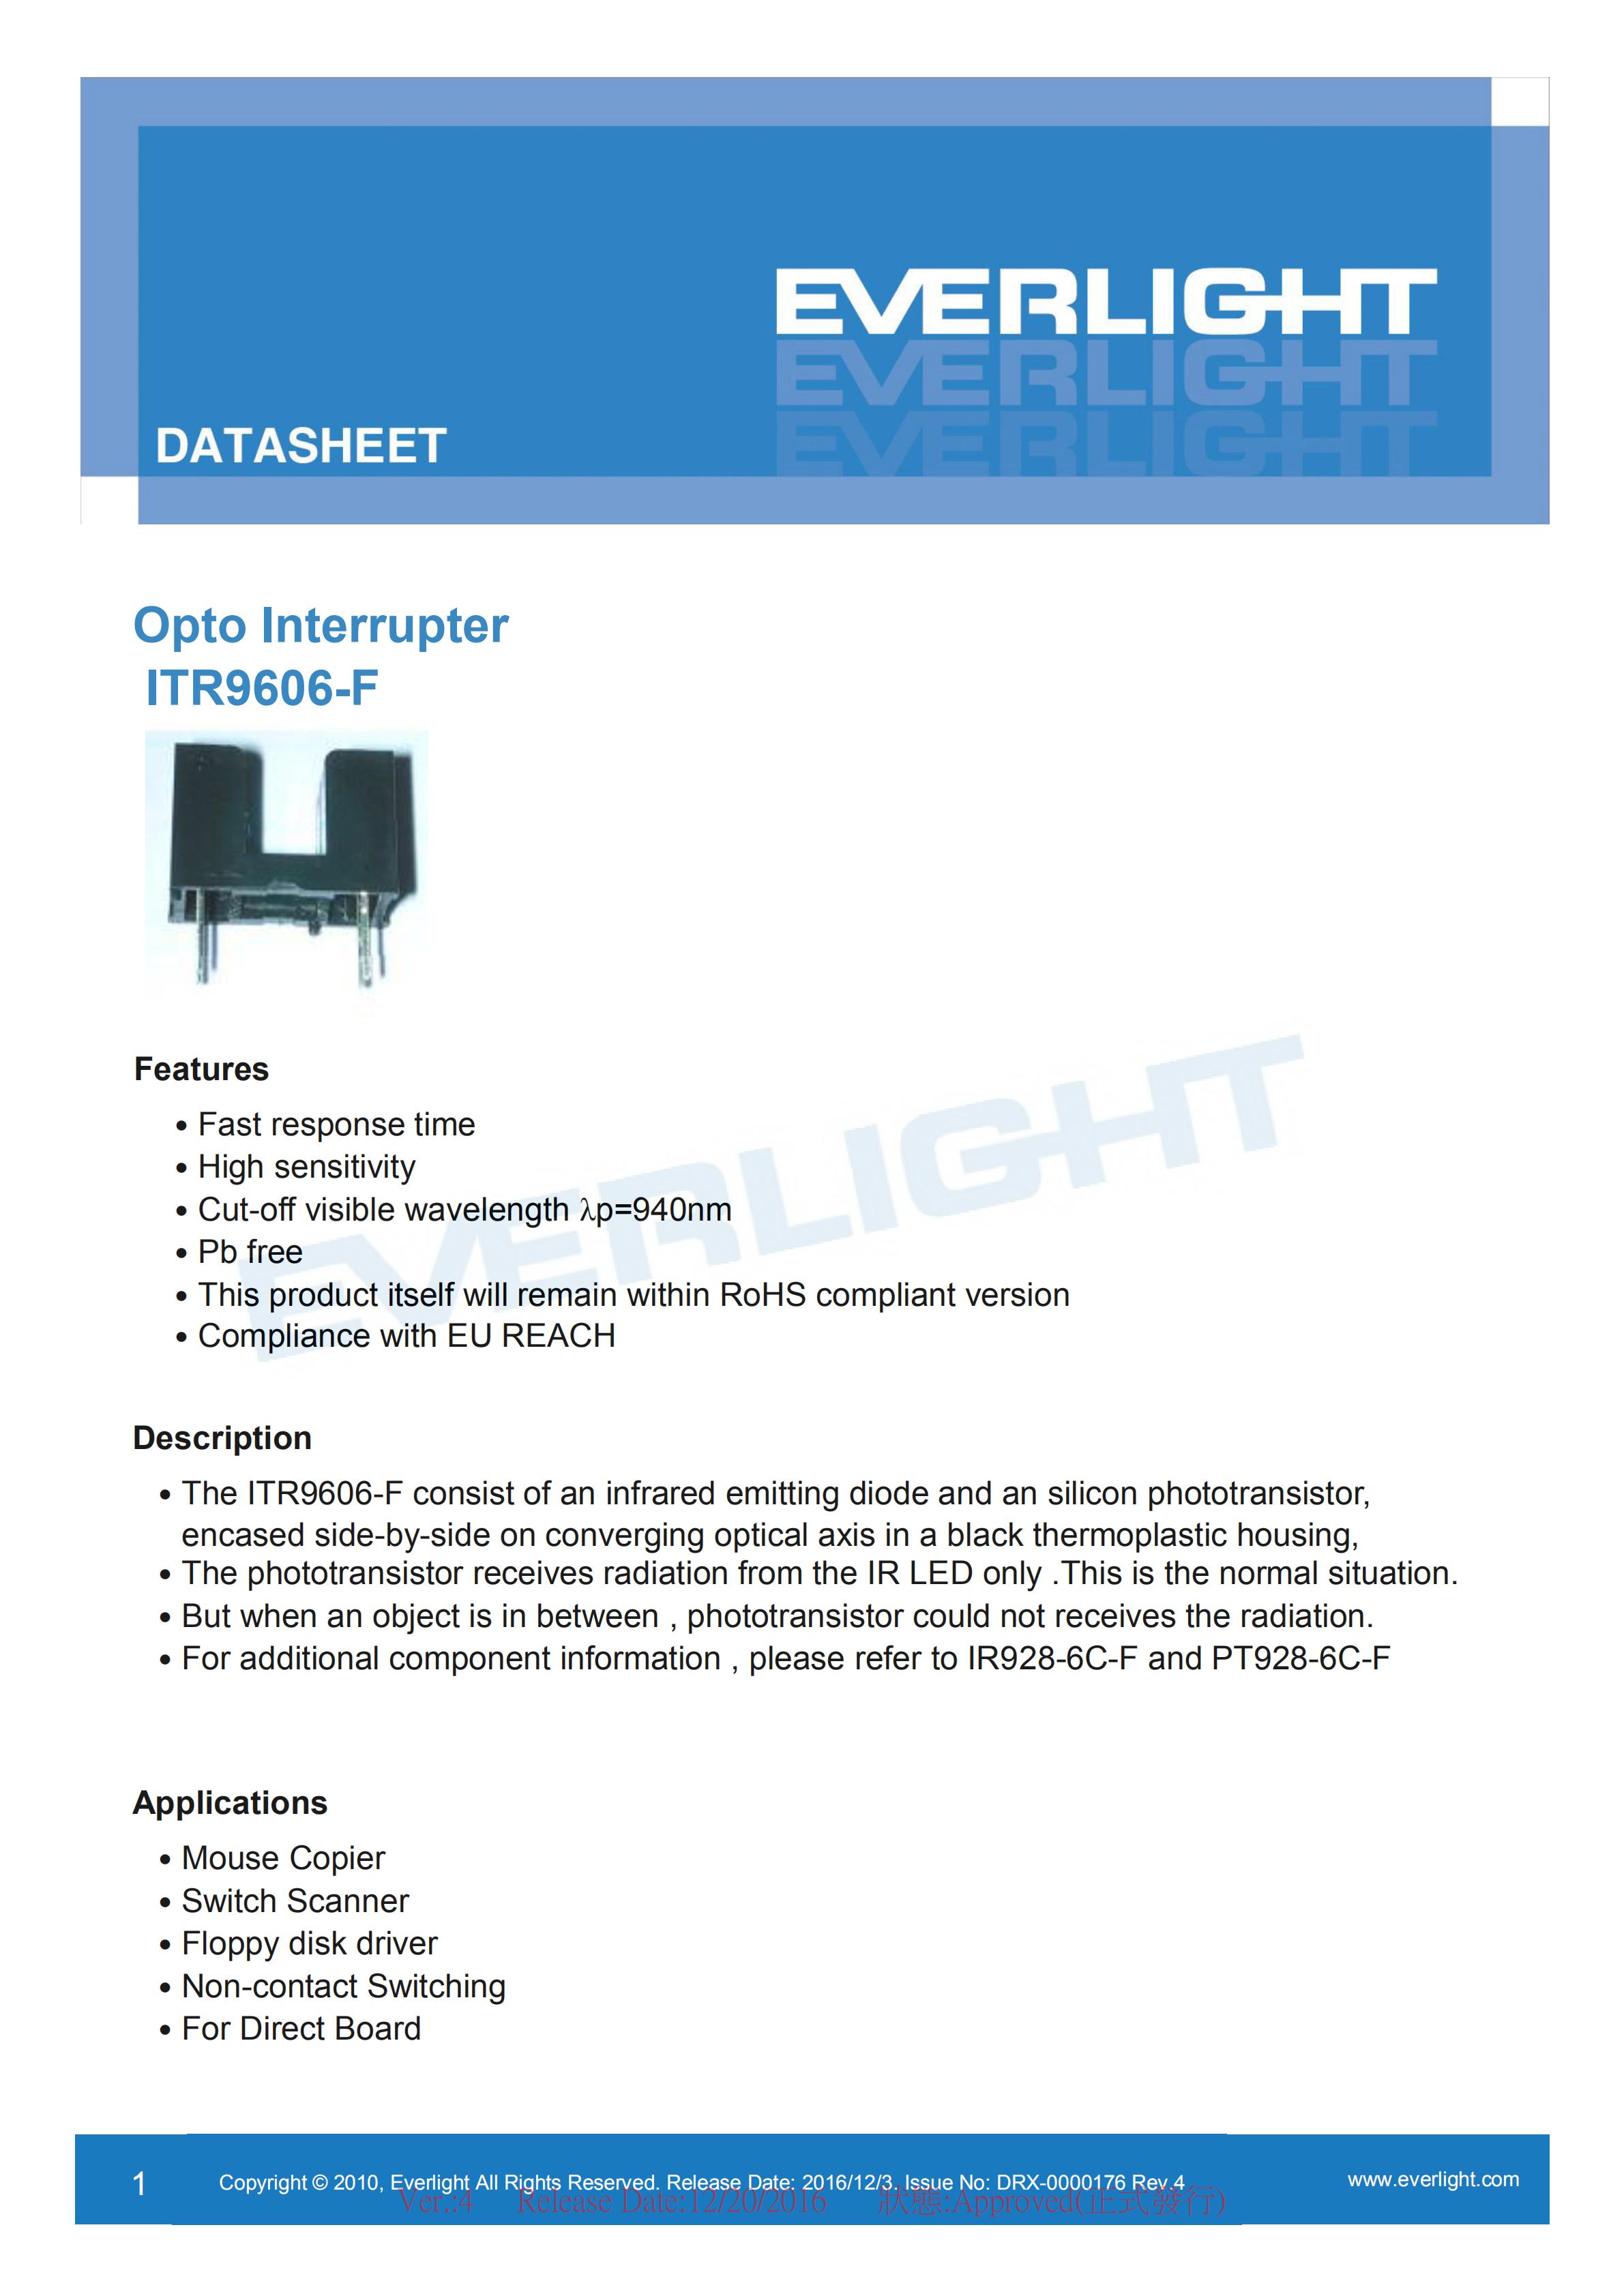 EVERLIGHT Optical Switch ITR9606-F Opto Interrupter Datasheet